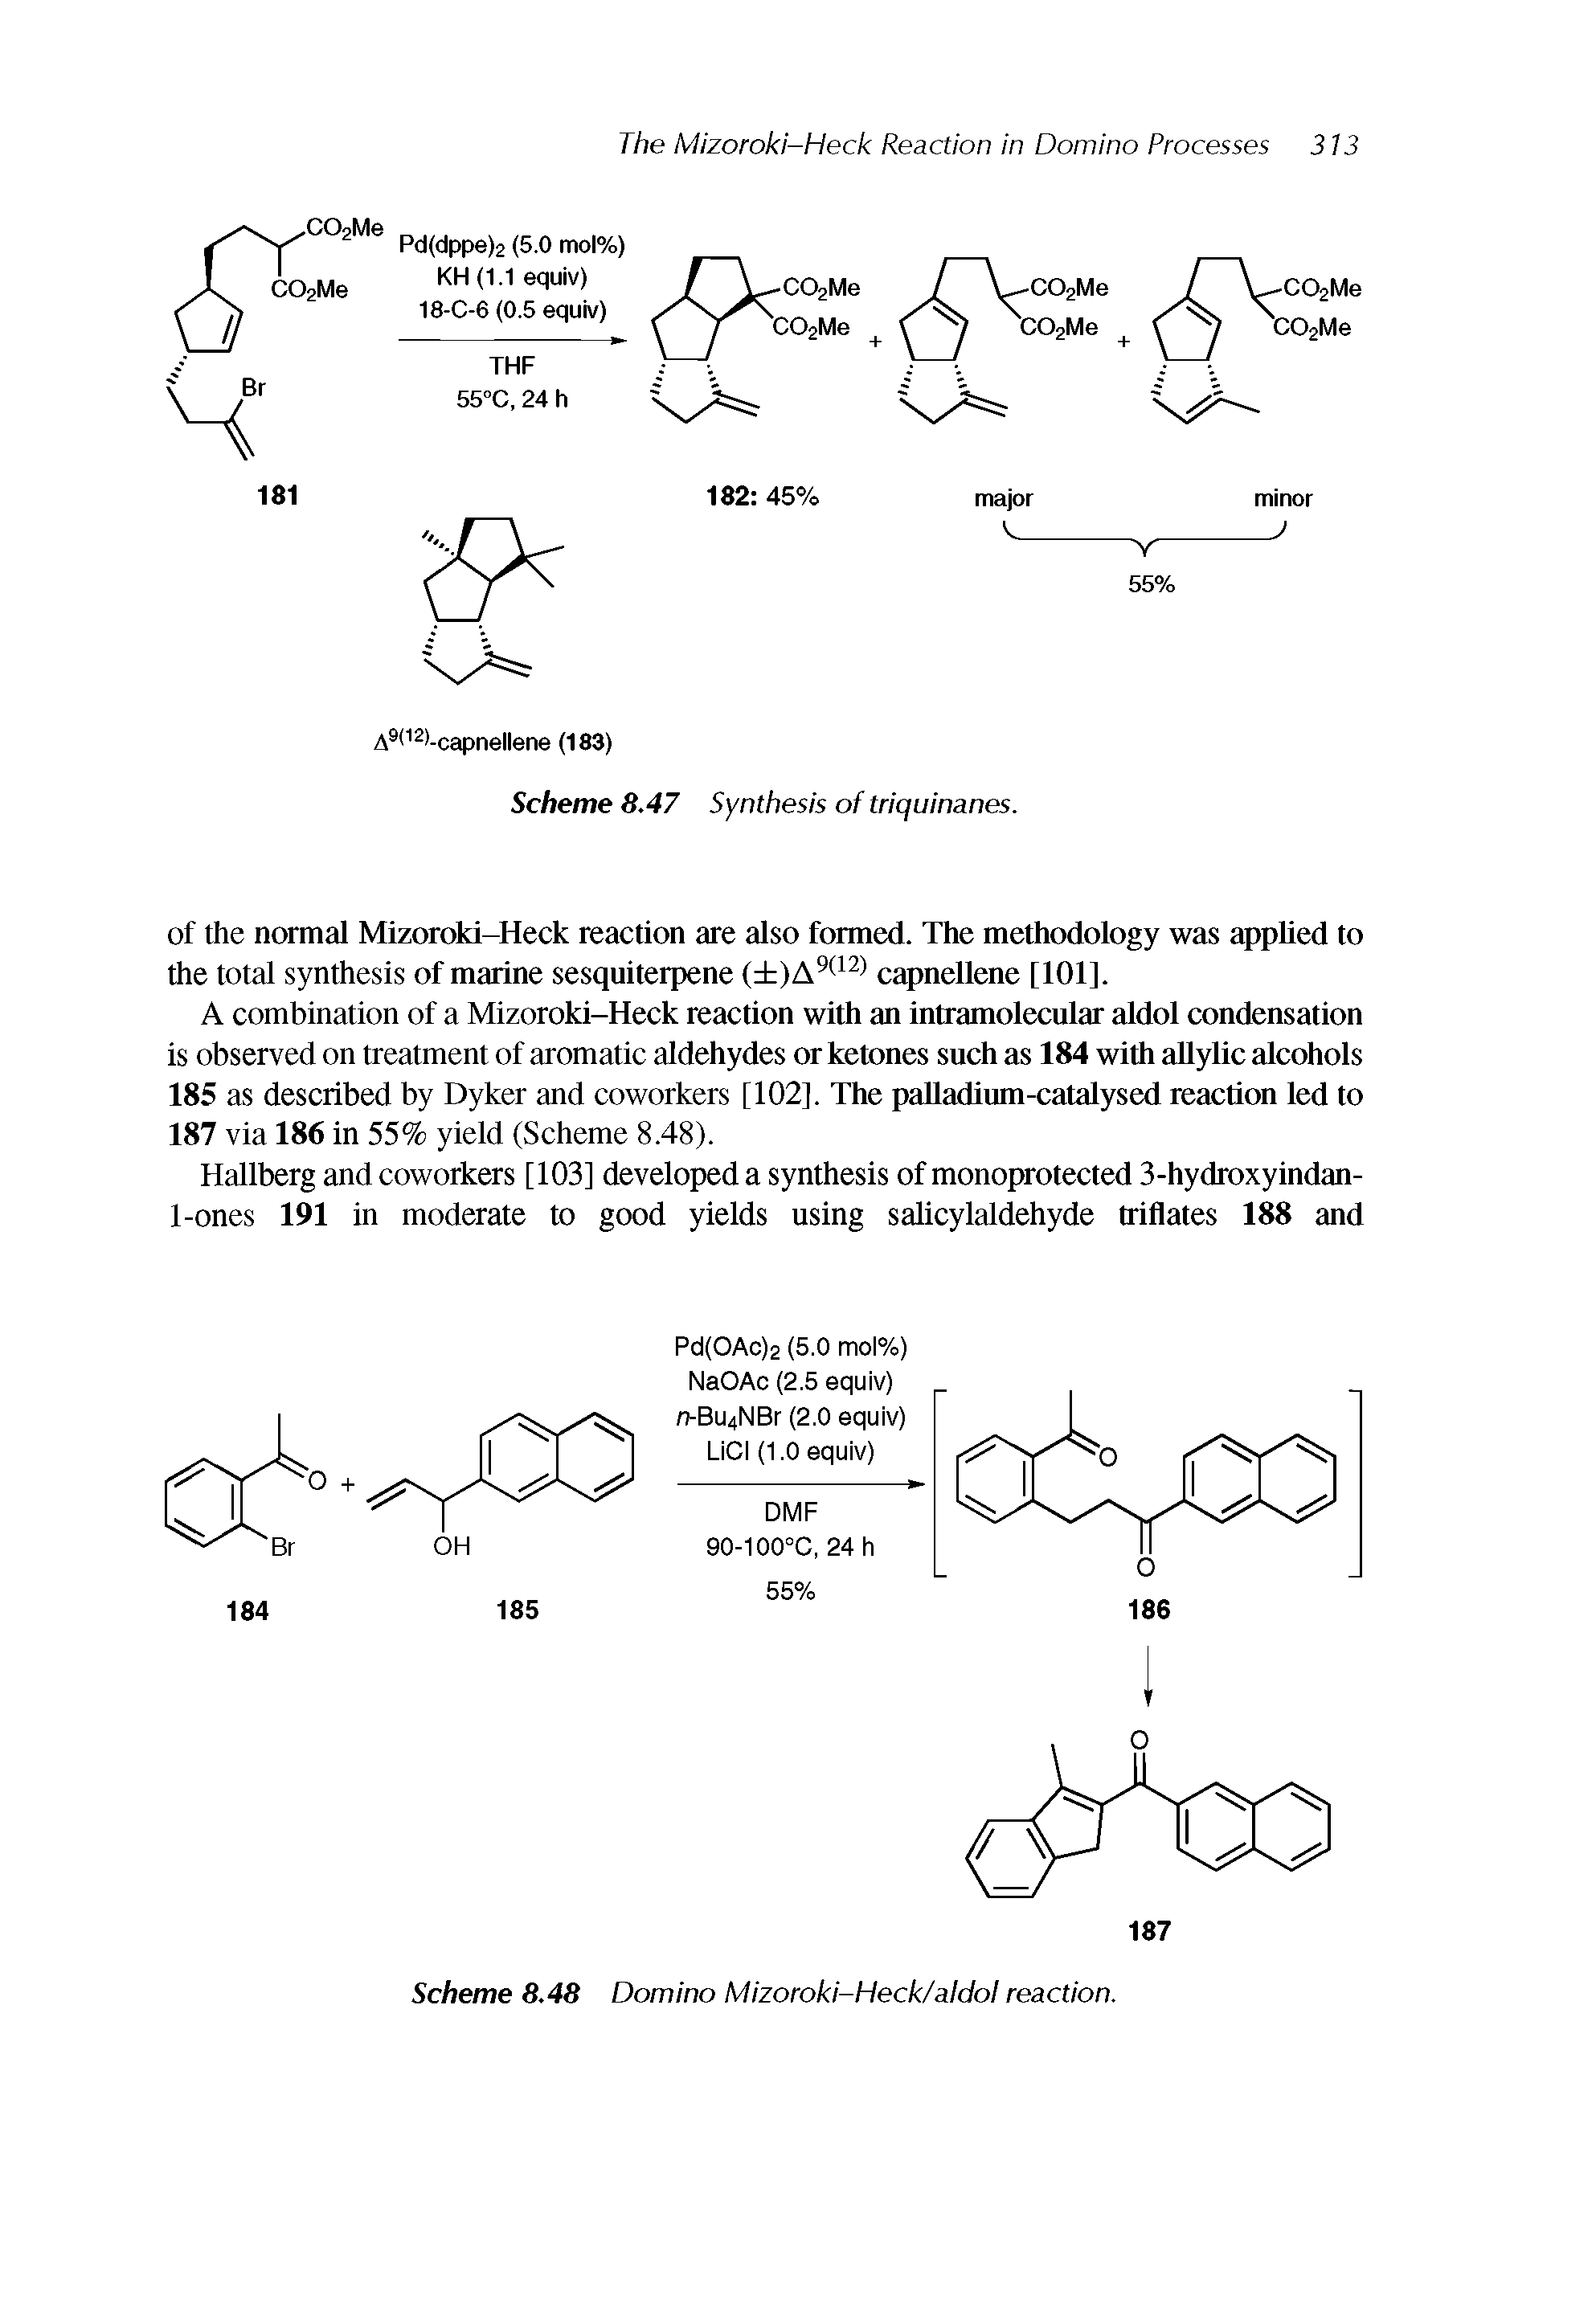 Scheme 8.48 Domino Mizoroki-Heck/aldol reaction.